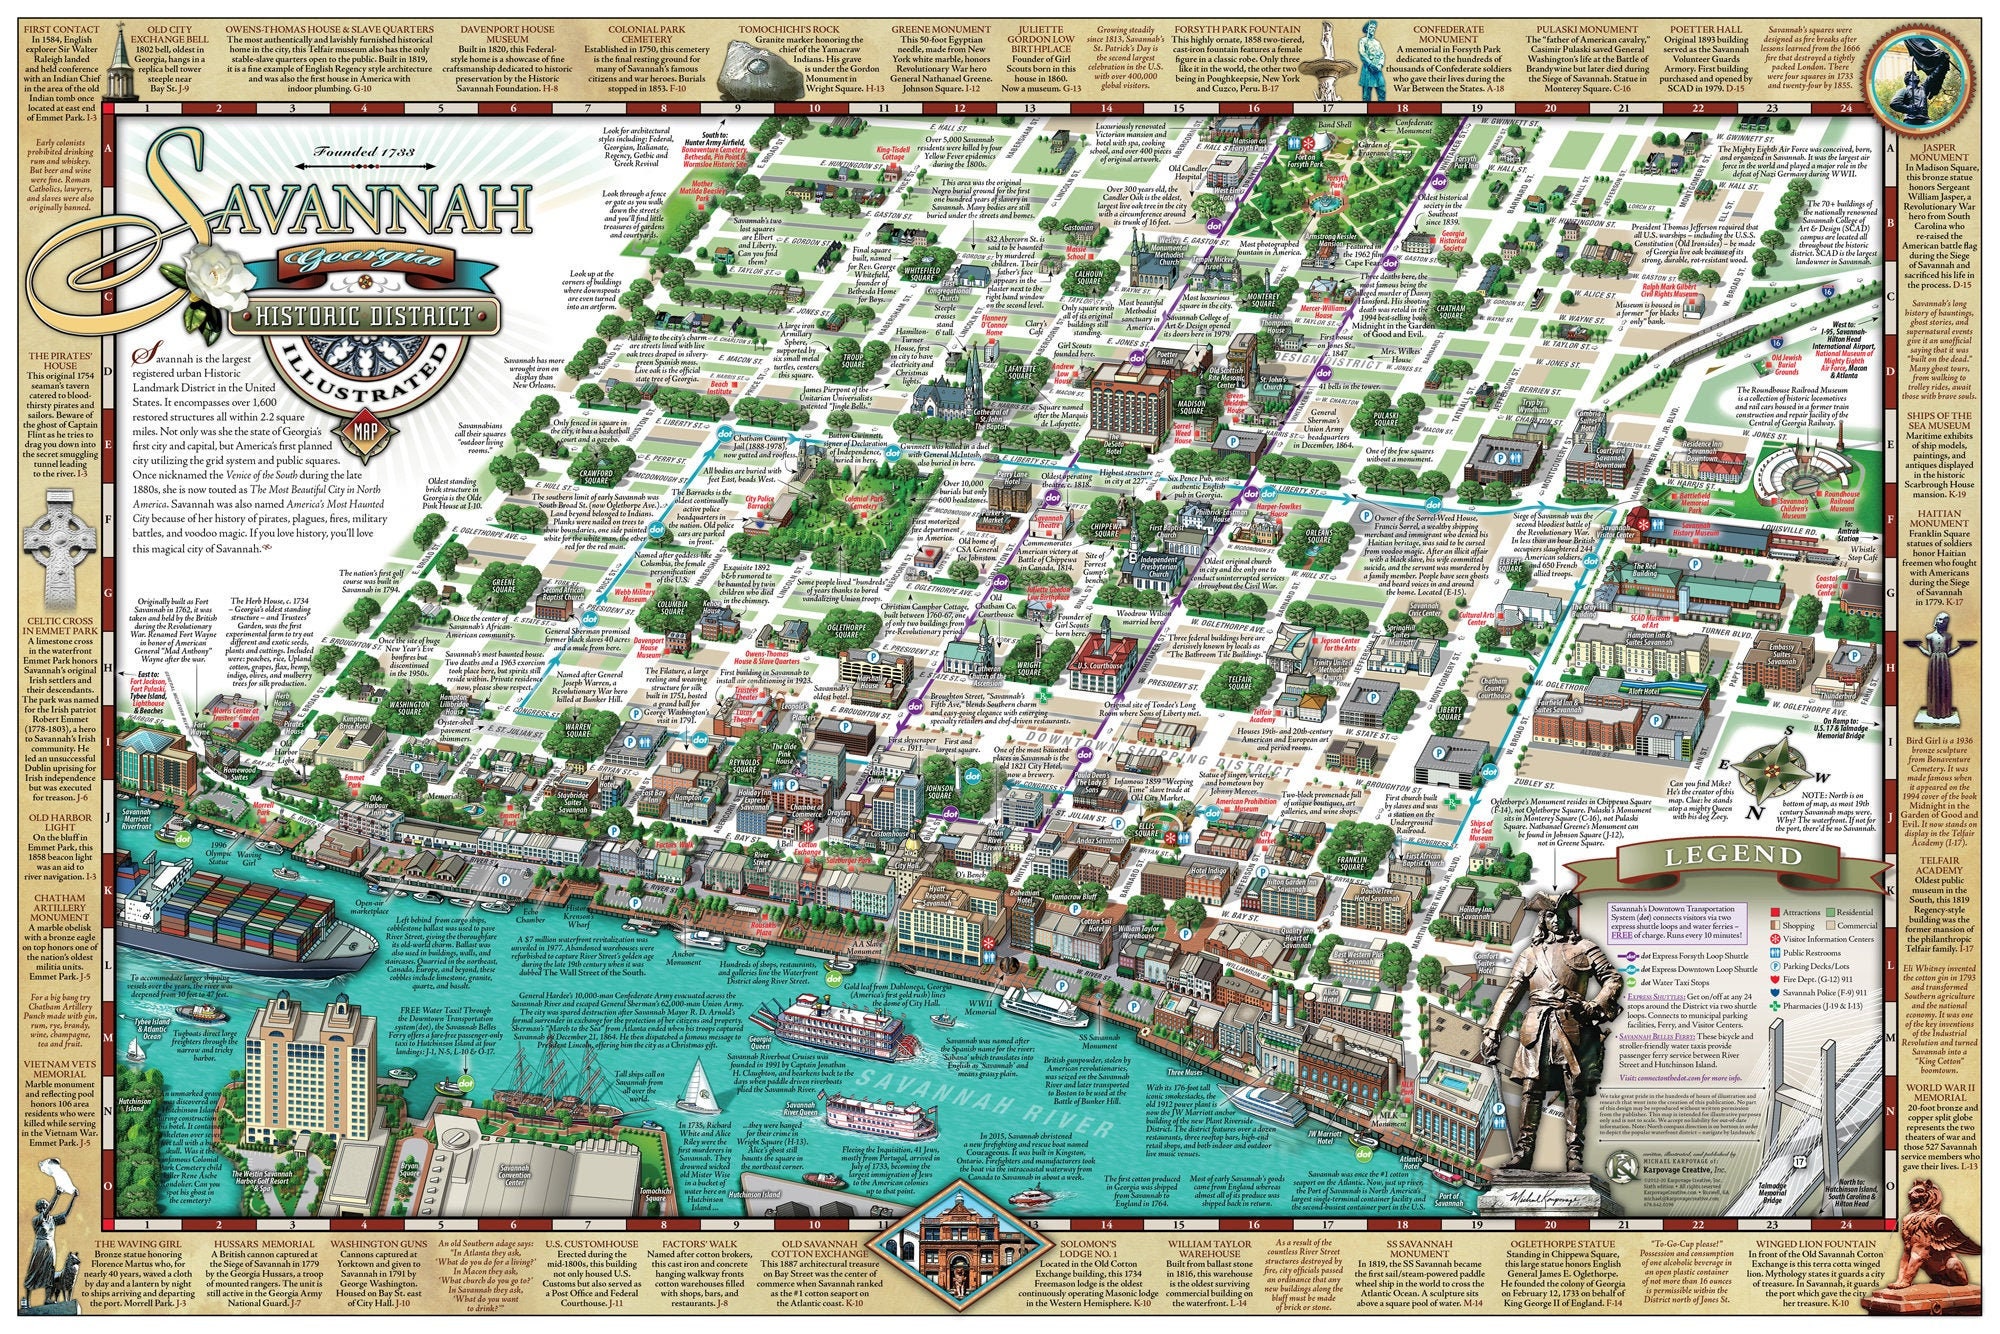 Printable Map Of Savannah Historic District - prntbl ...